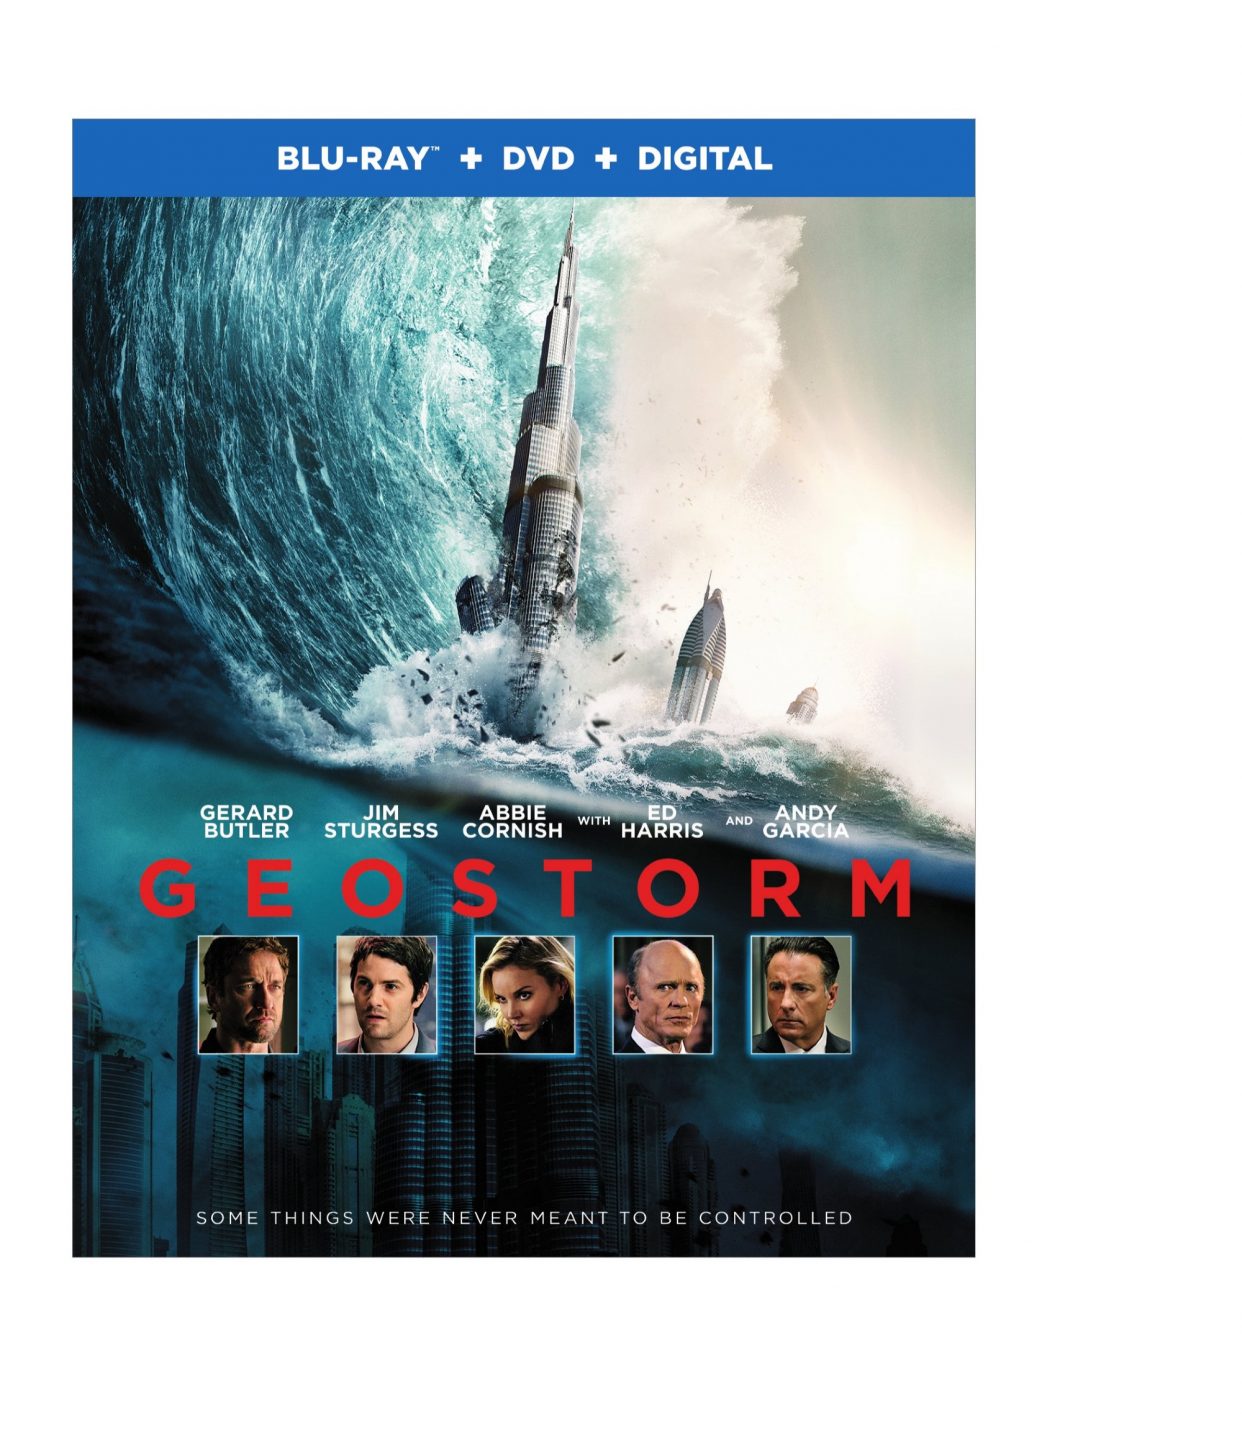 Geostorm Blu-Ray/DVD/Digital HD cover (Warner Bros. Home Entertainment)